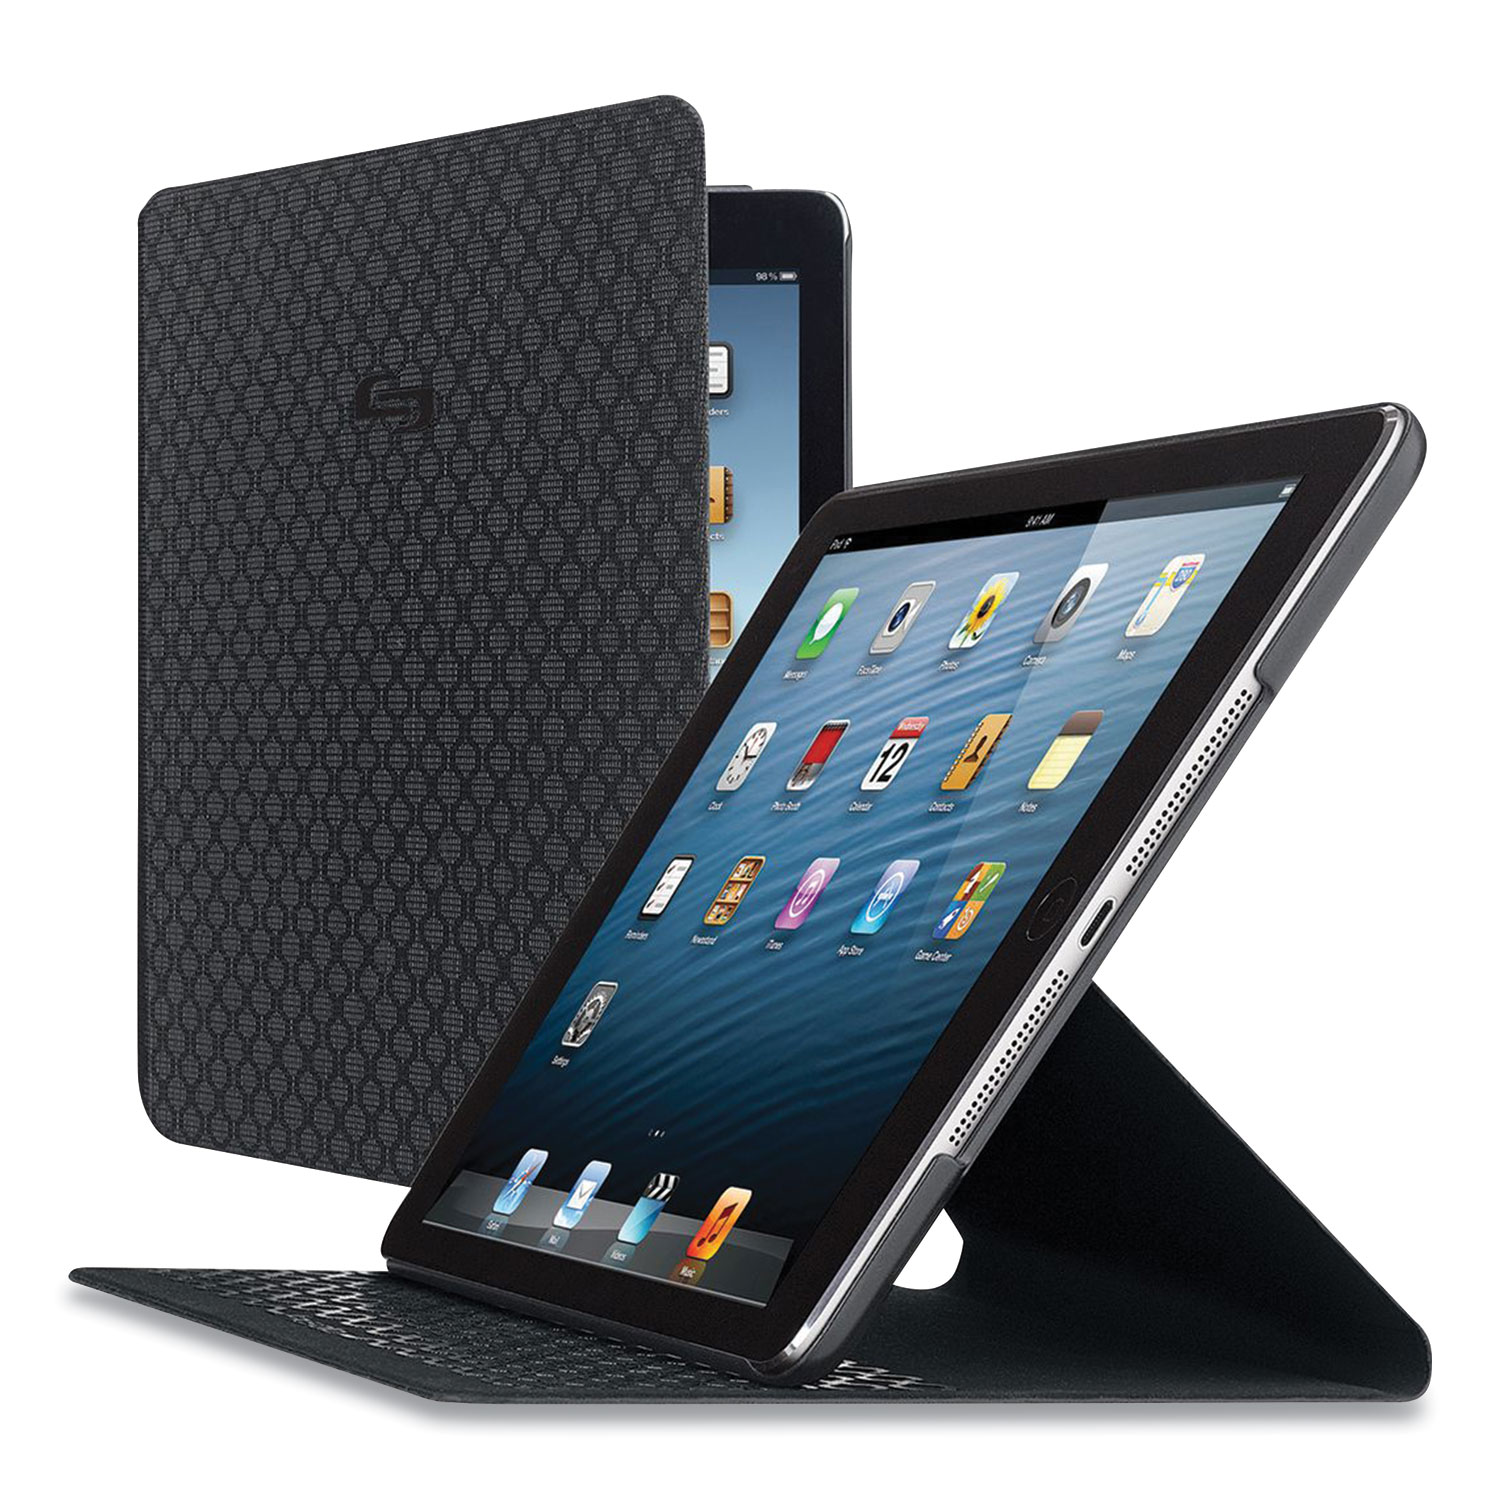 Solo Reflex Slim Case for iPad Air, Black